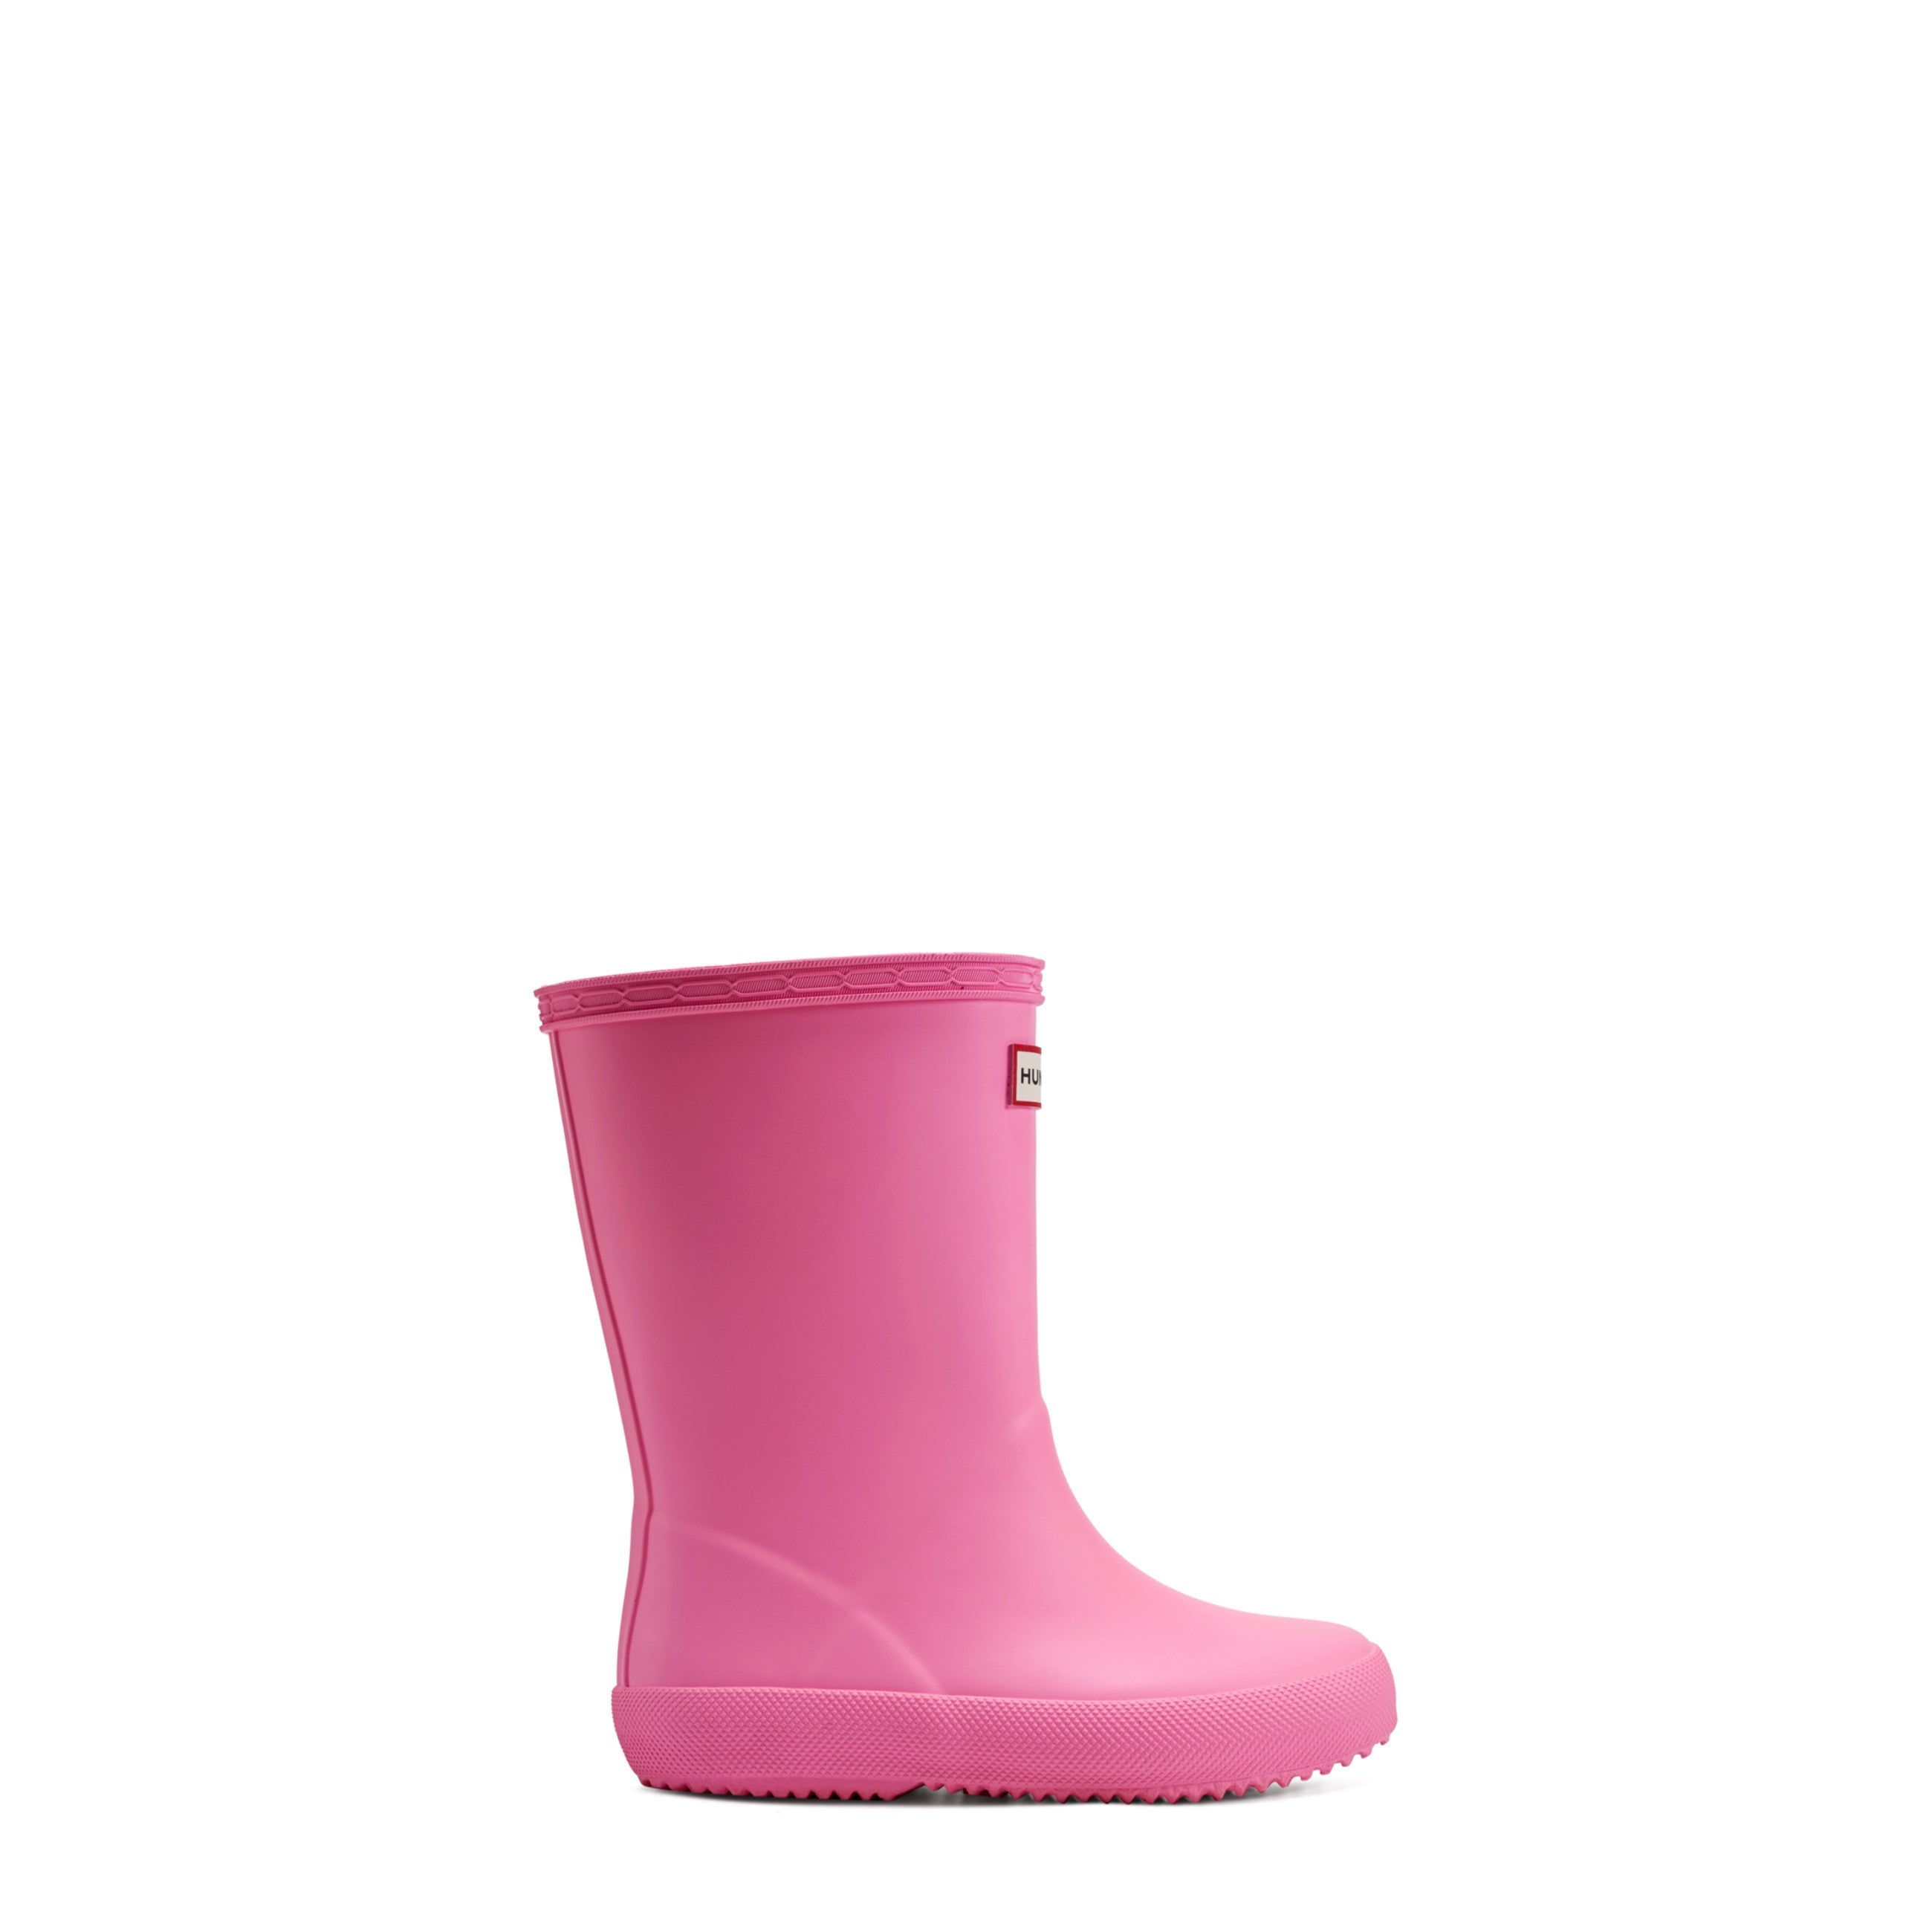 Kids First Classic Rain Boots - Hunter Boots Kids First Classic Rain Boots Highlighter Pink Hunter Boots Kids First > Rain Boots > Kids First Rain Boots